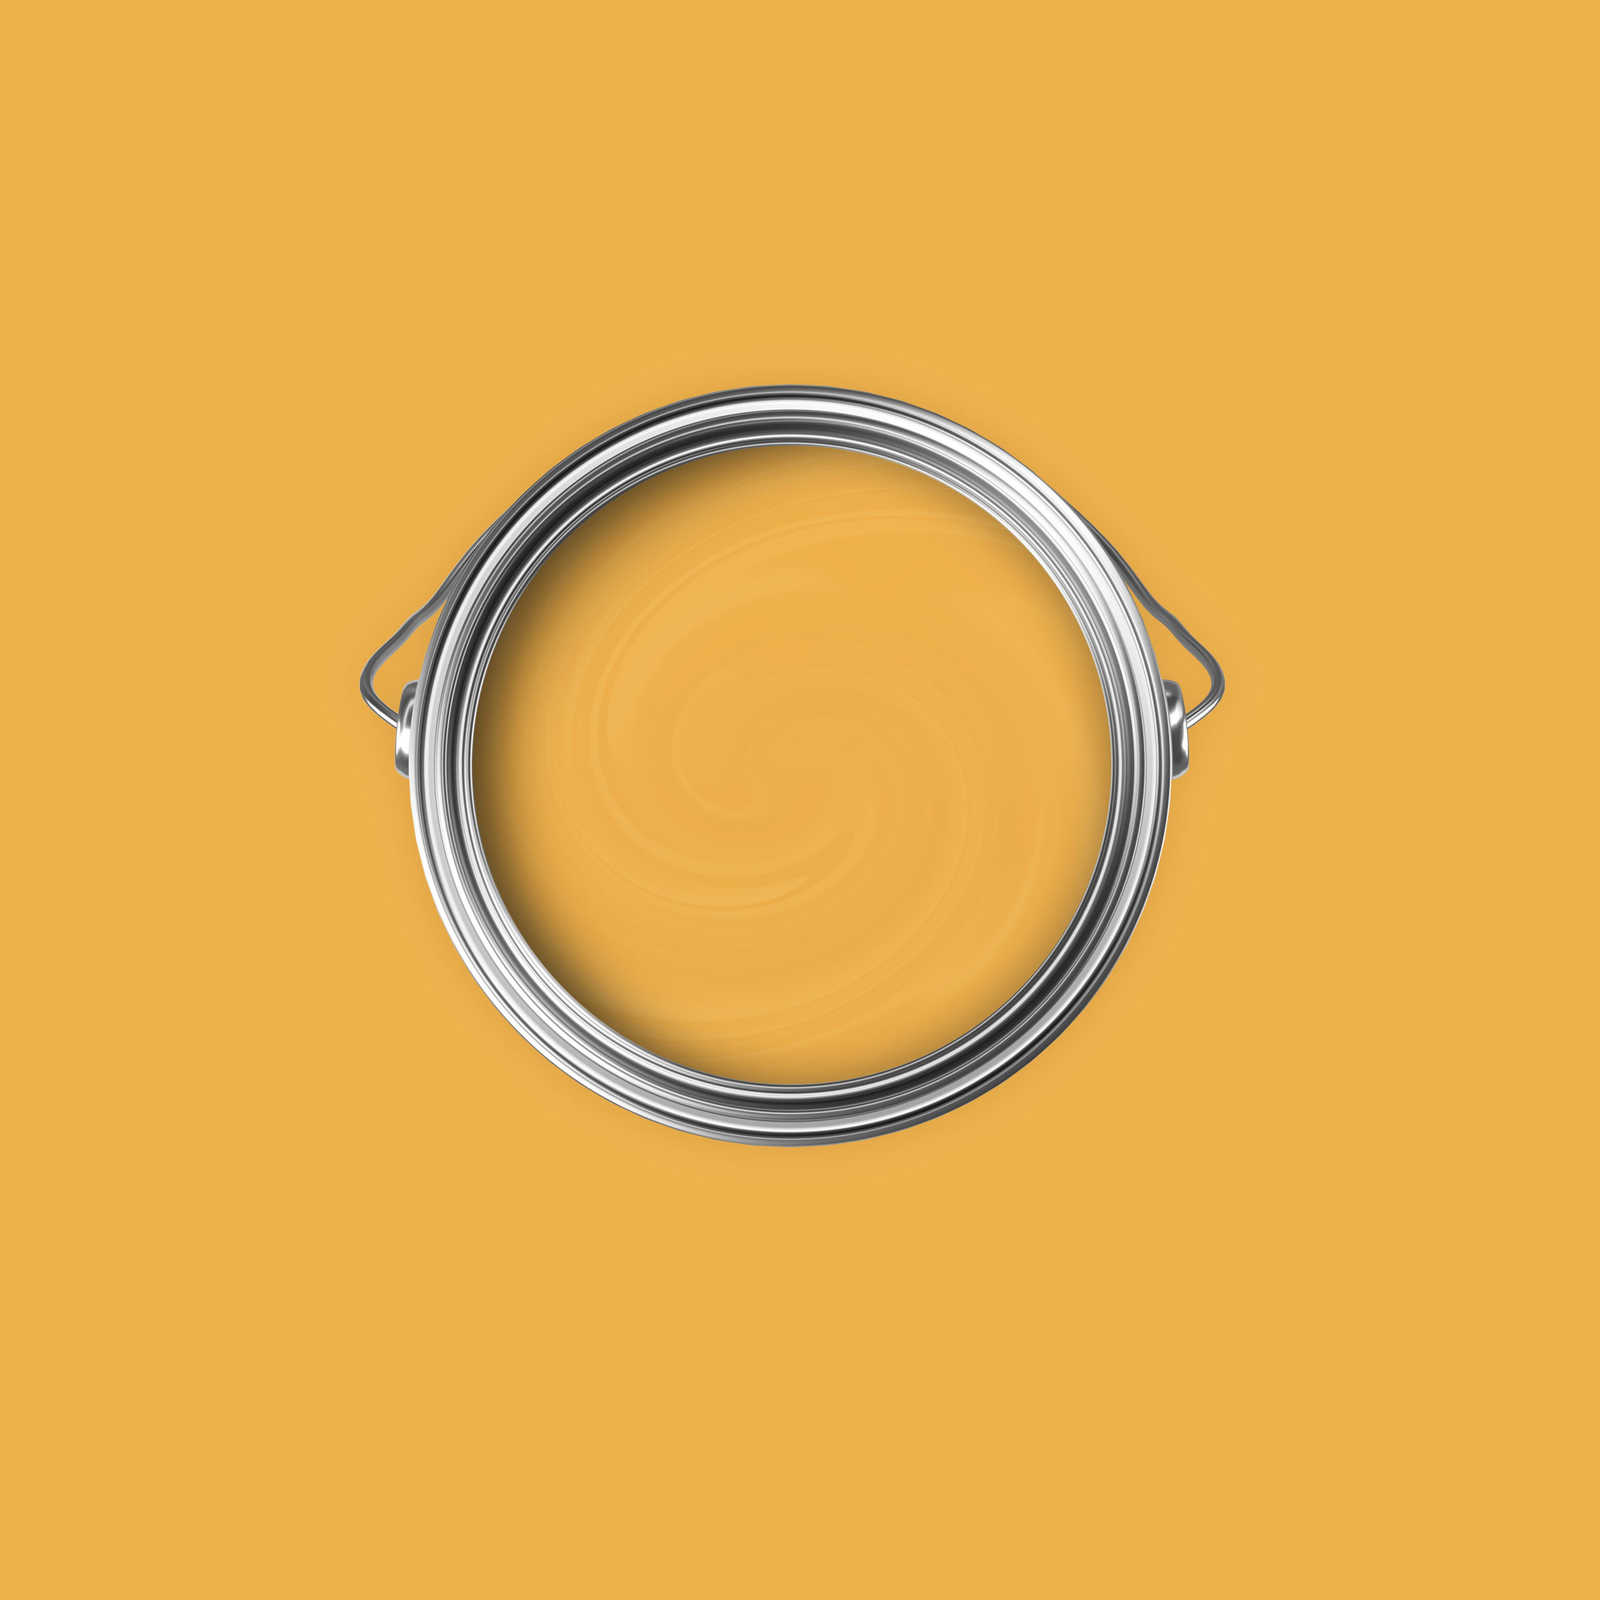             Premium Muurverf sterk saffraangeel »Juicy Yellow« NW806 – 2,5 liter
        